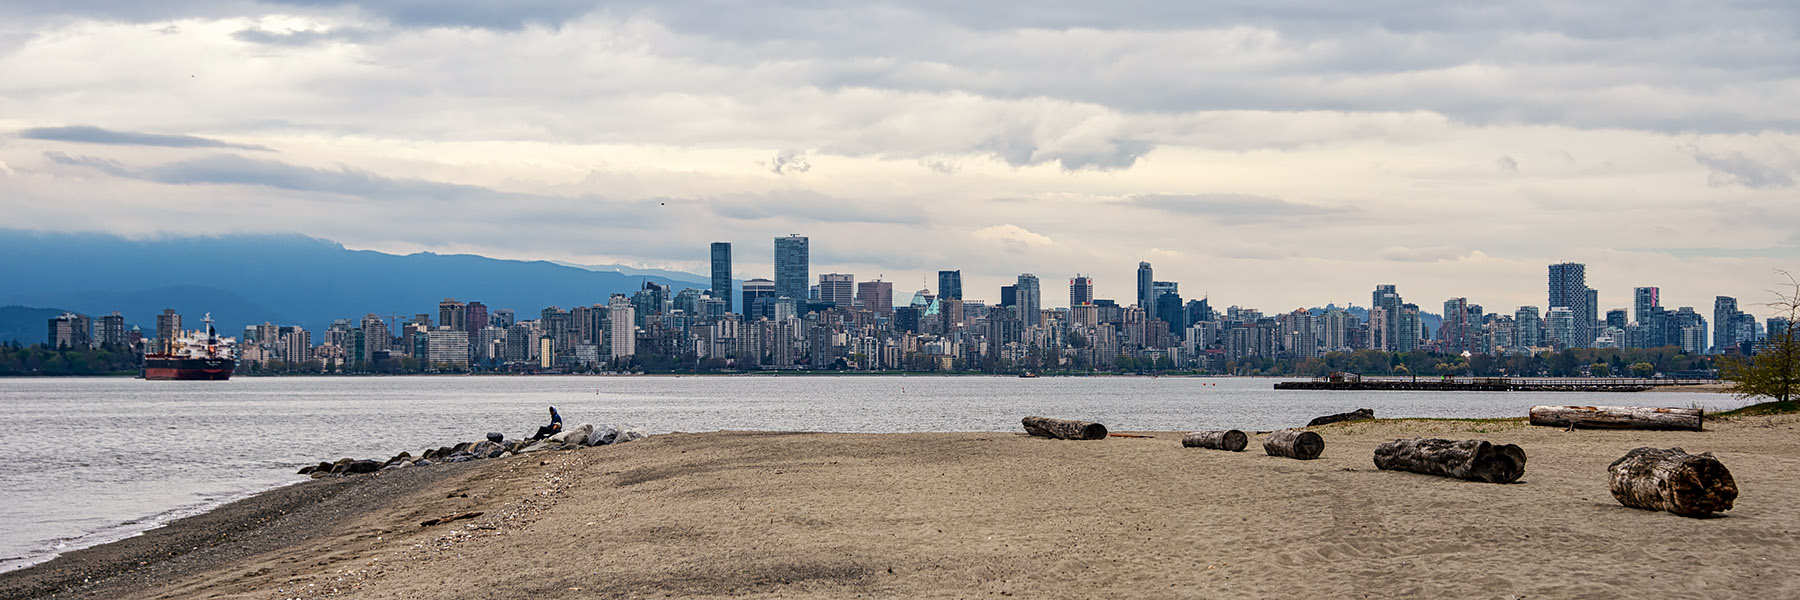 Vancouver skyline taken from Spanish Banks Beach Park